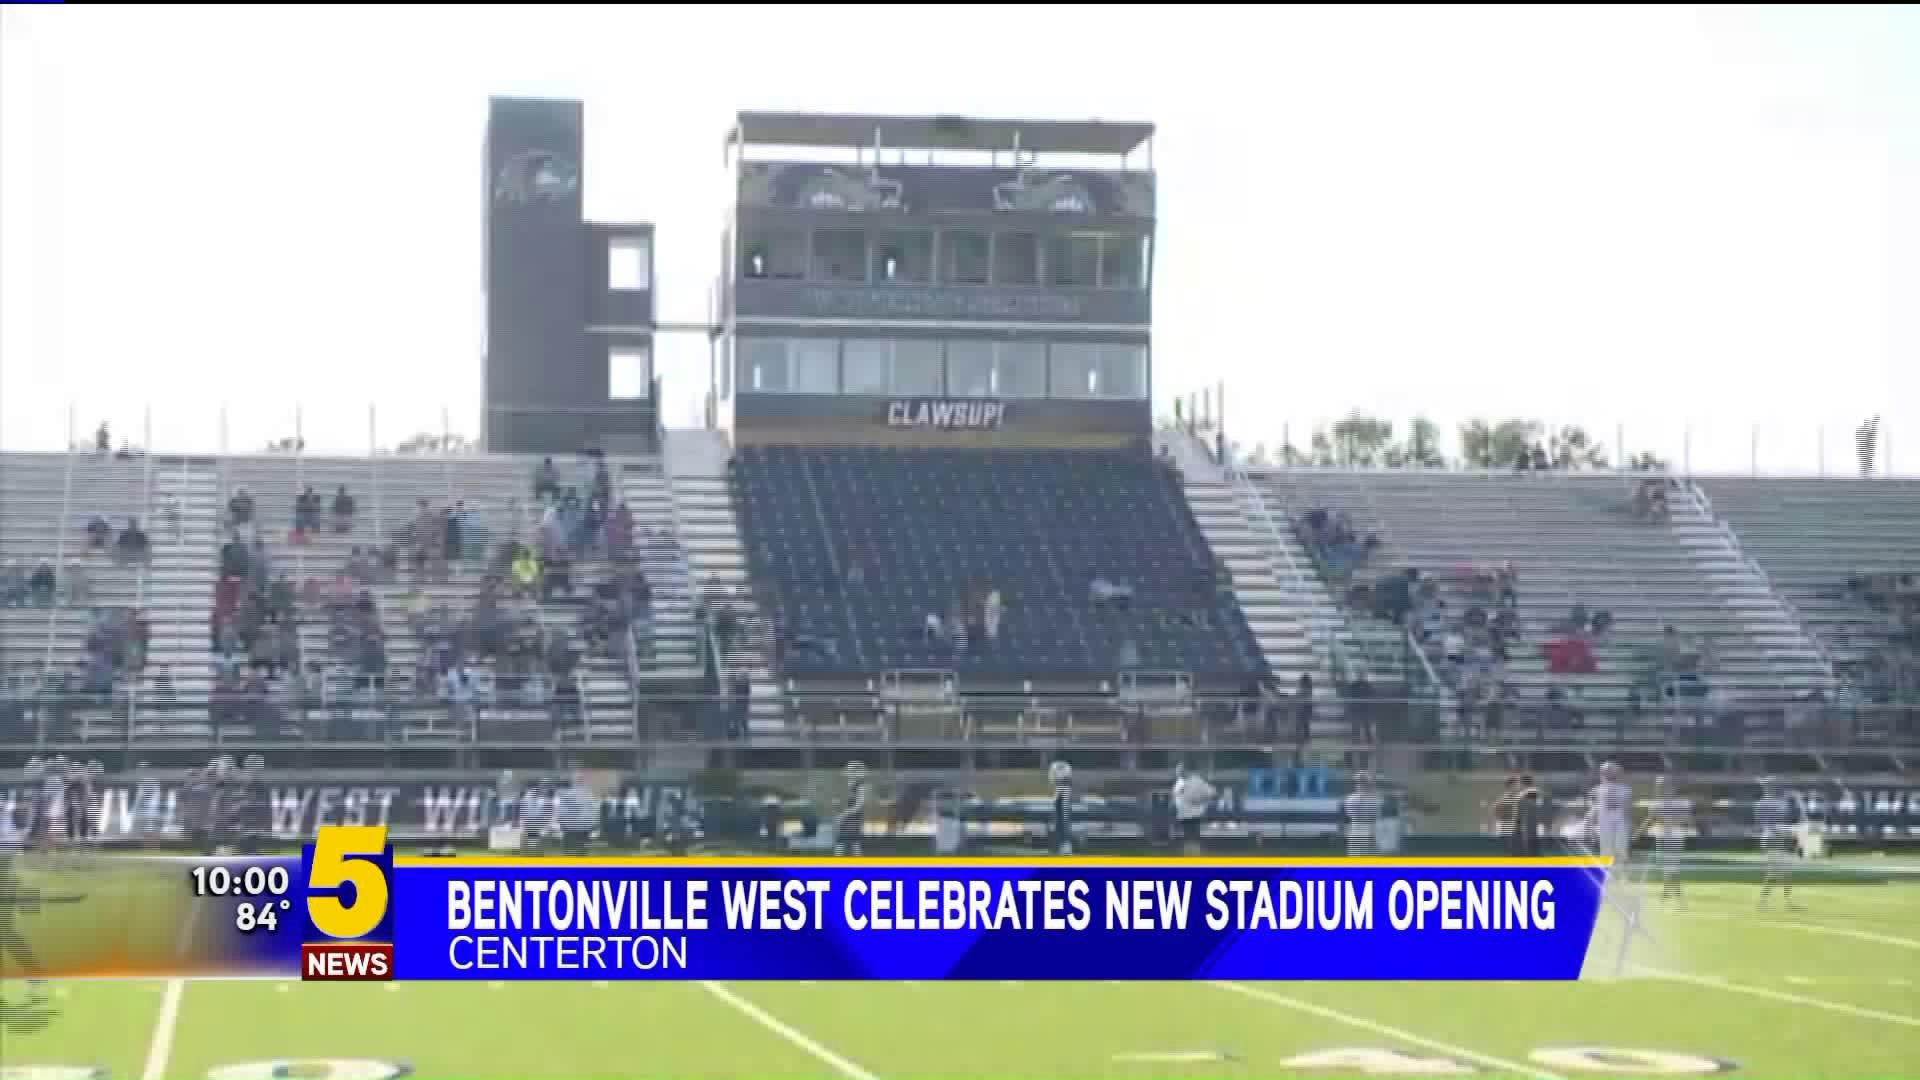 Bentonville West Celebrates New Stadium